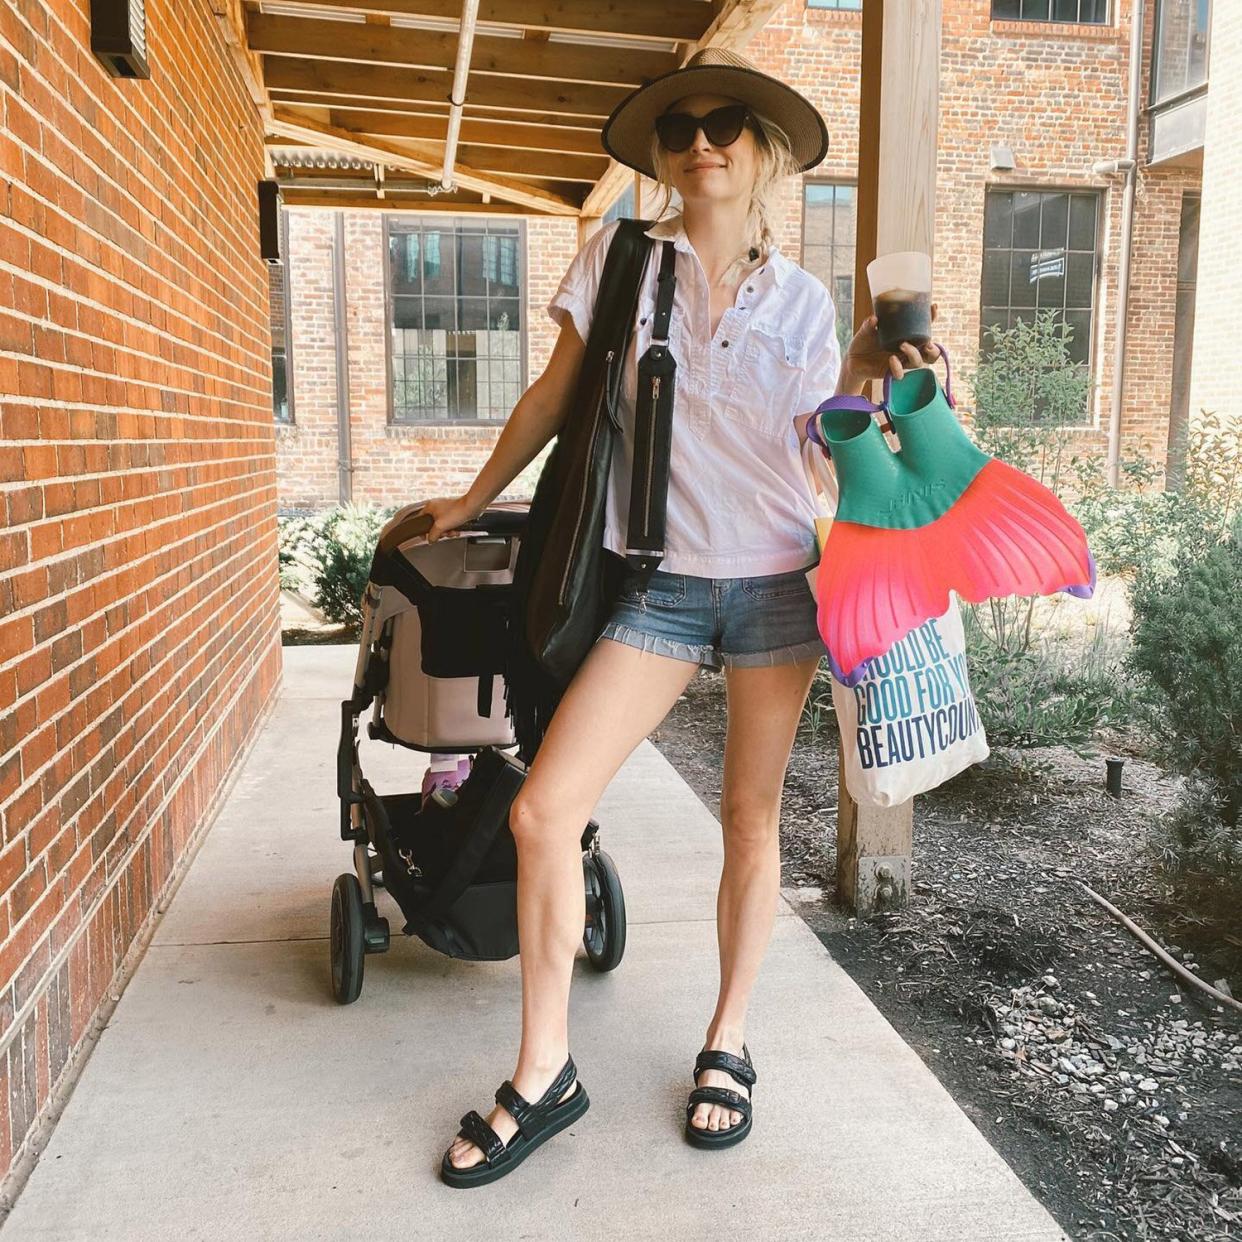 Candice Accola Gives A Glimpse At Single Mom Life